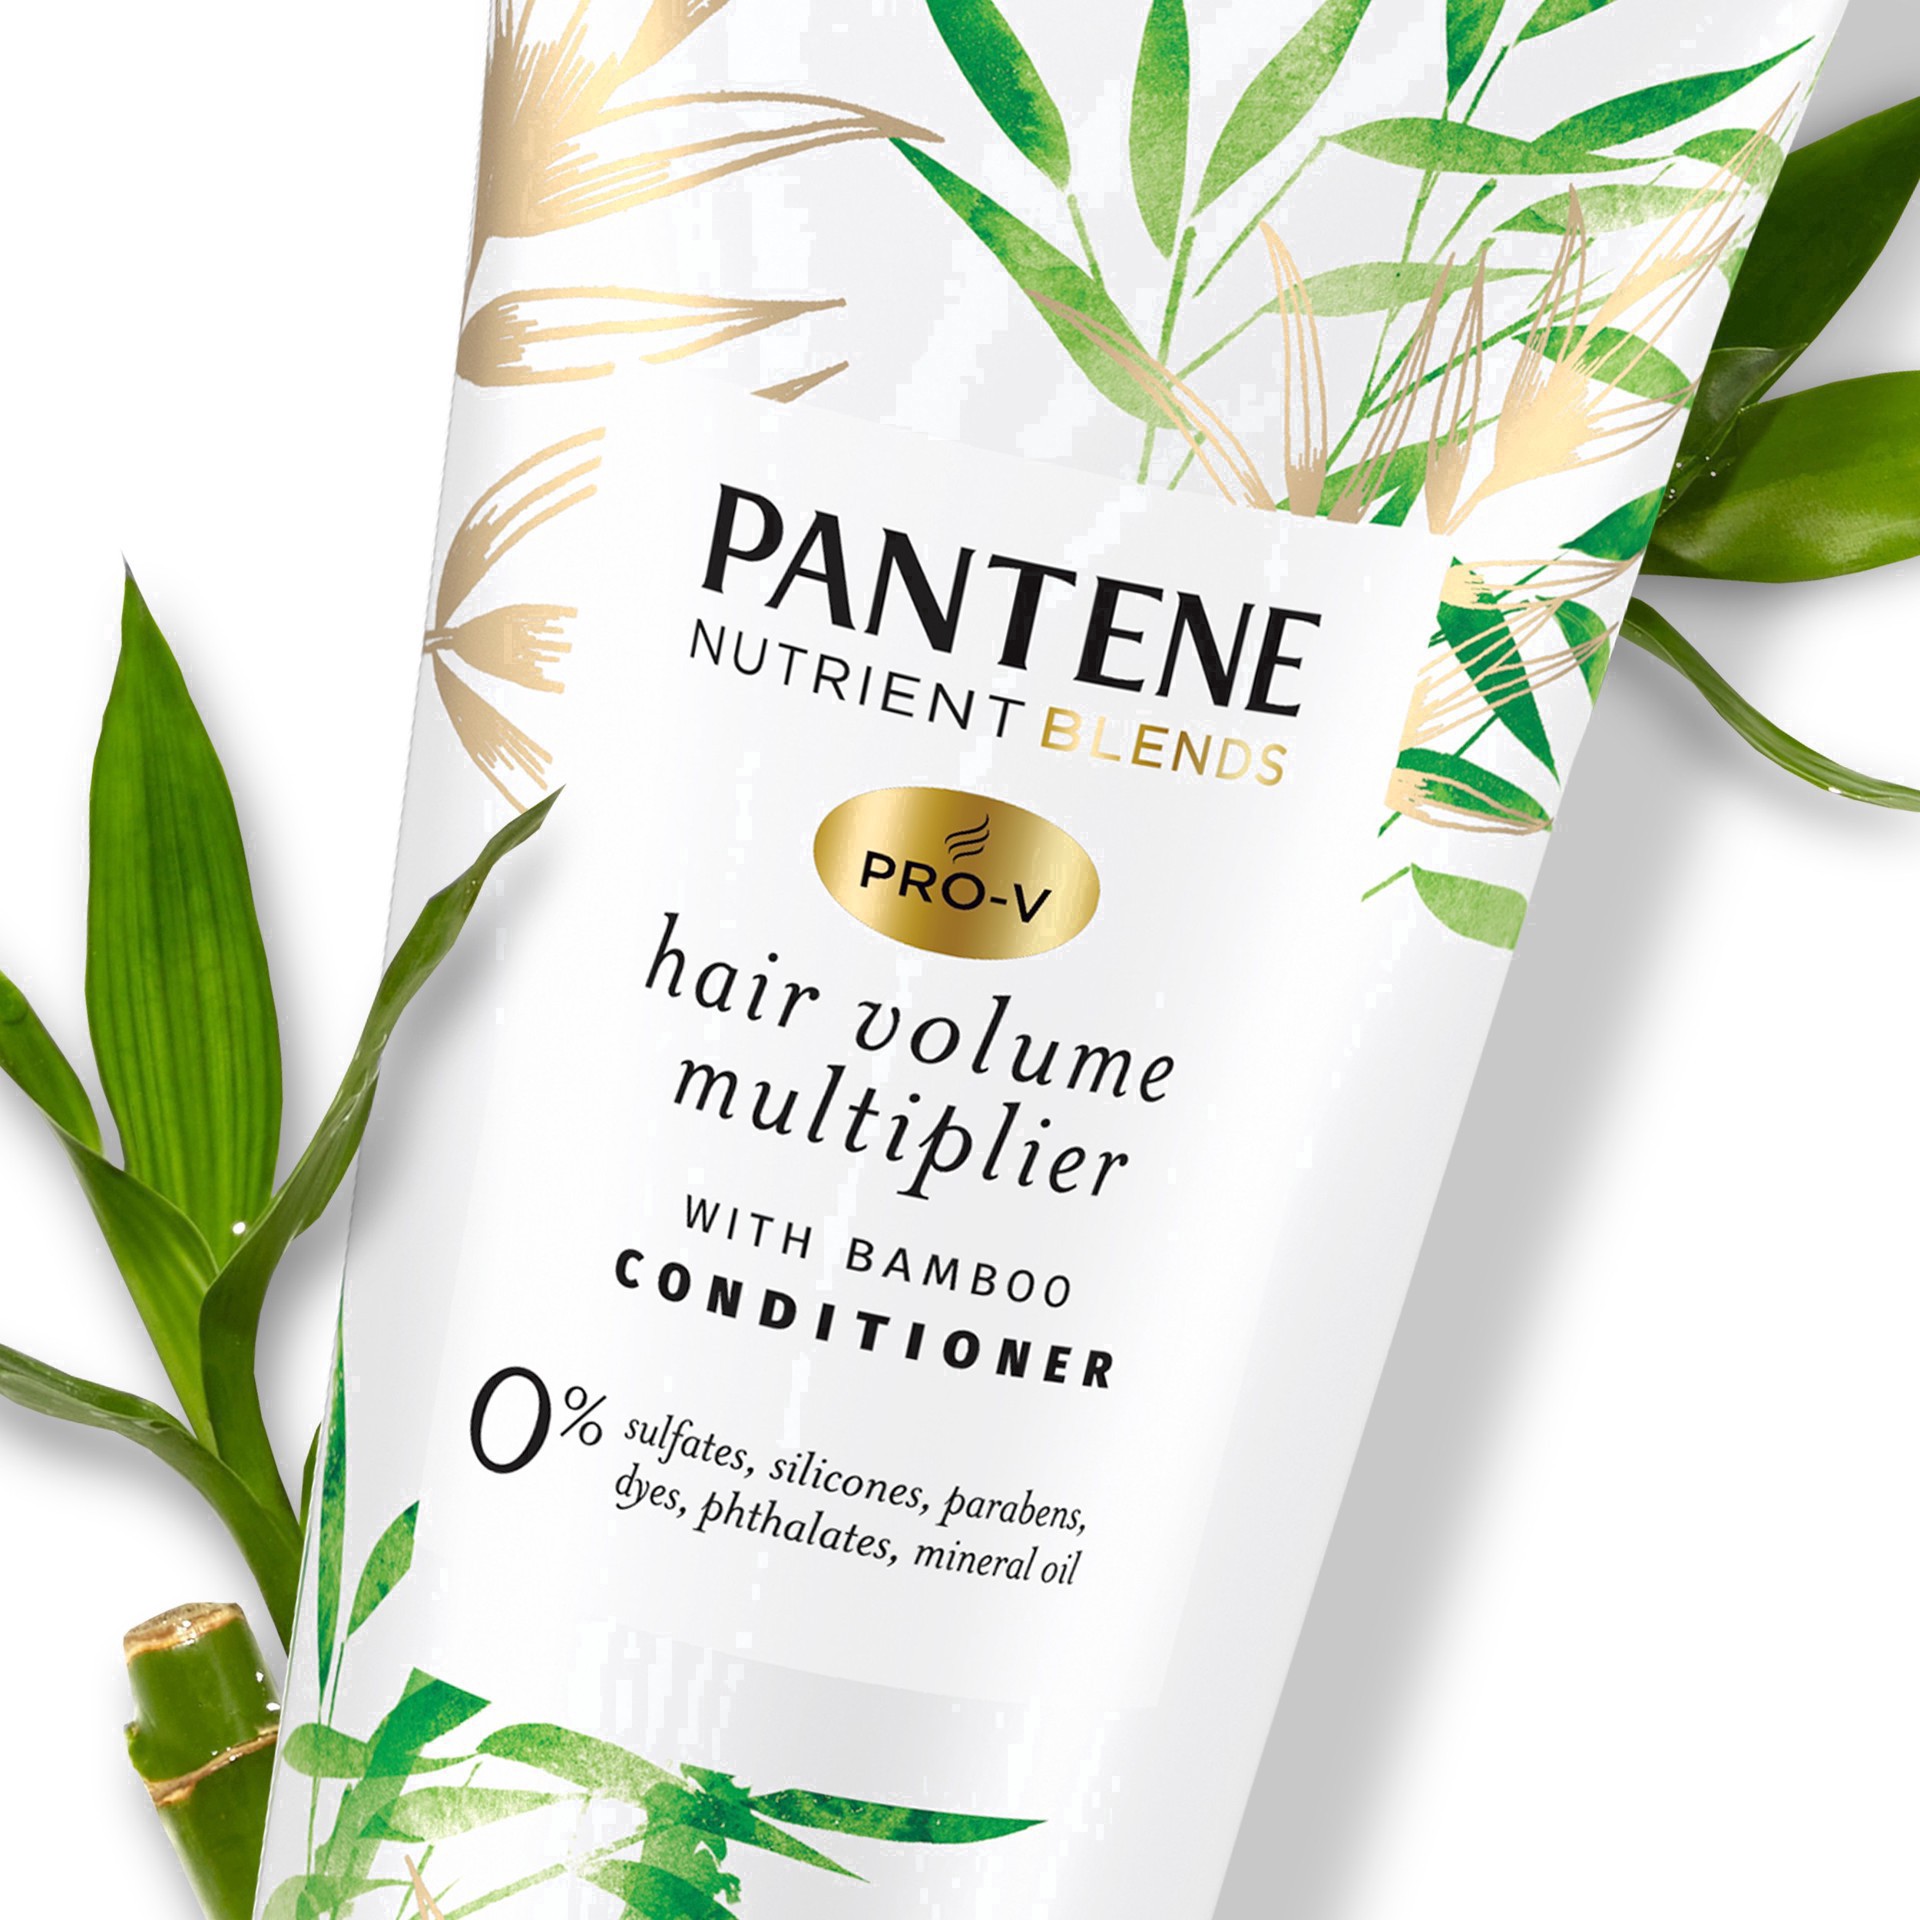 slide 13 of 85, Pantene Nutrient Blends Hair Volume Multiplier Silicone Free Bamboo Conditioner for Fine, Thin Hair, 8.0 fl oz, 8 fl oz